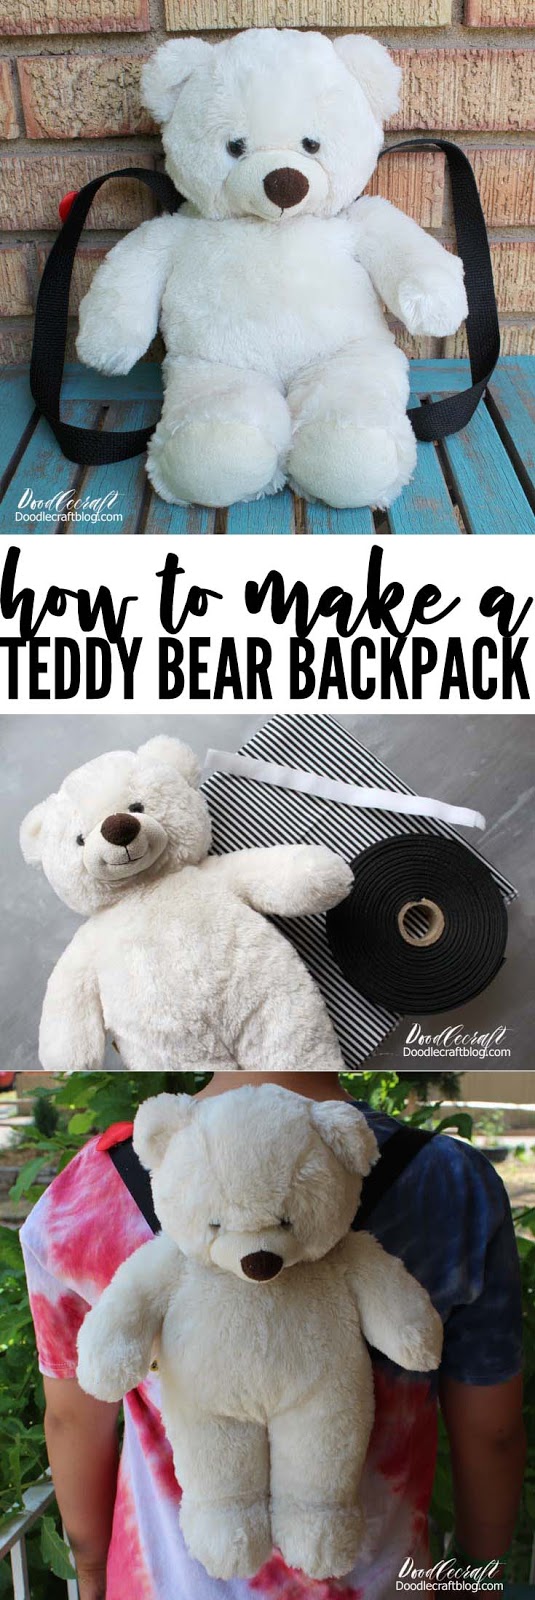 TEDDY BEAR BACKPACK TUTORIAL PART 1 